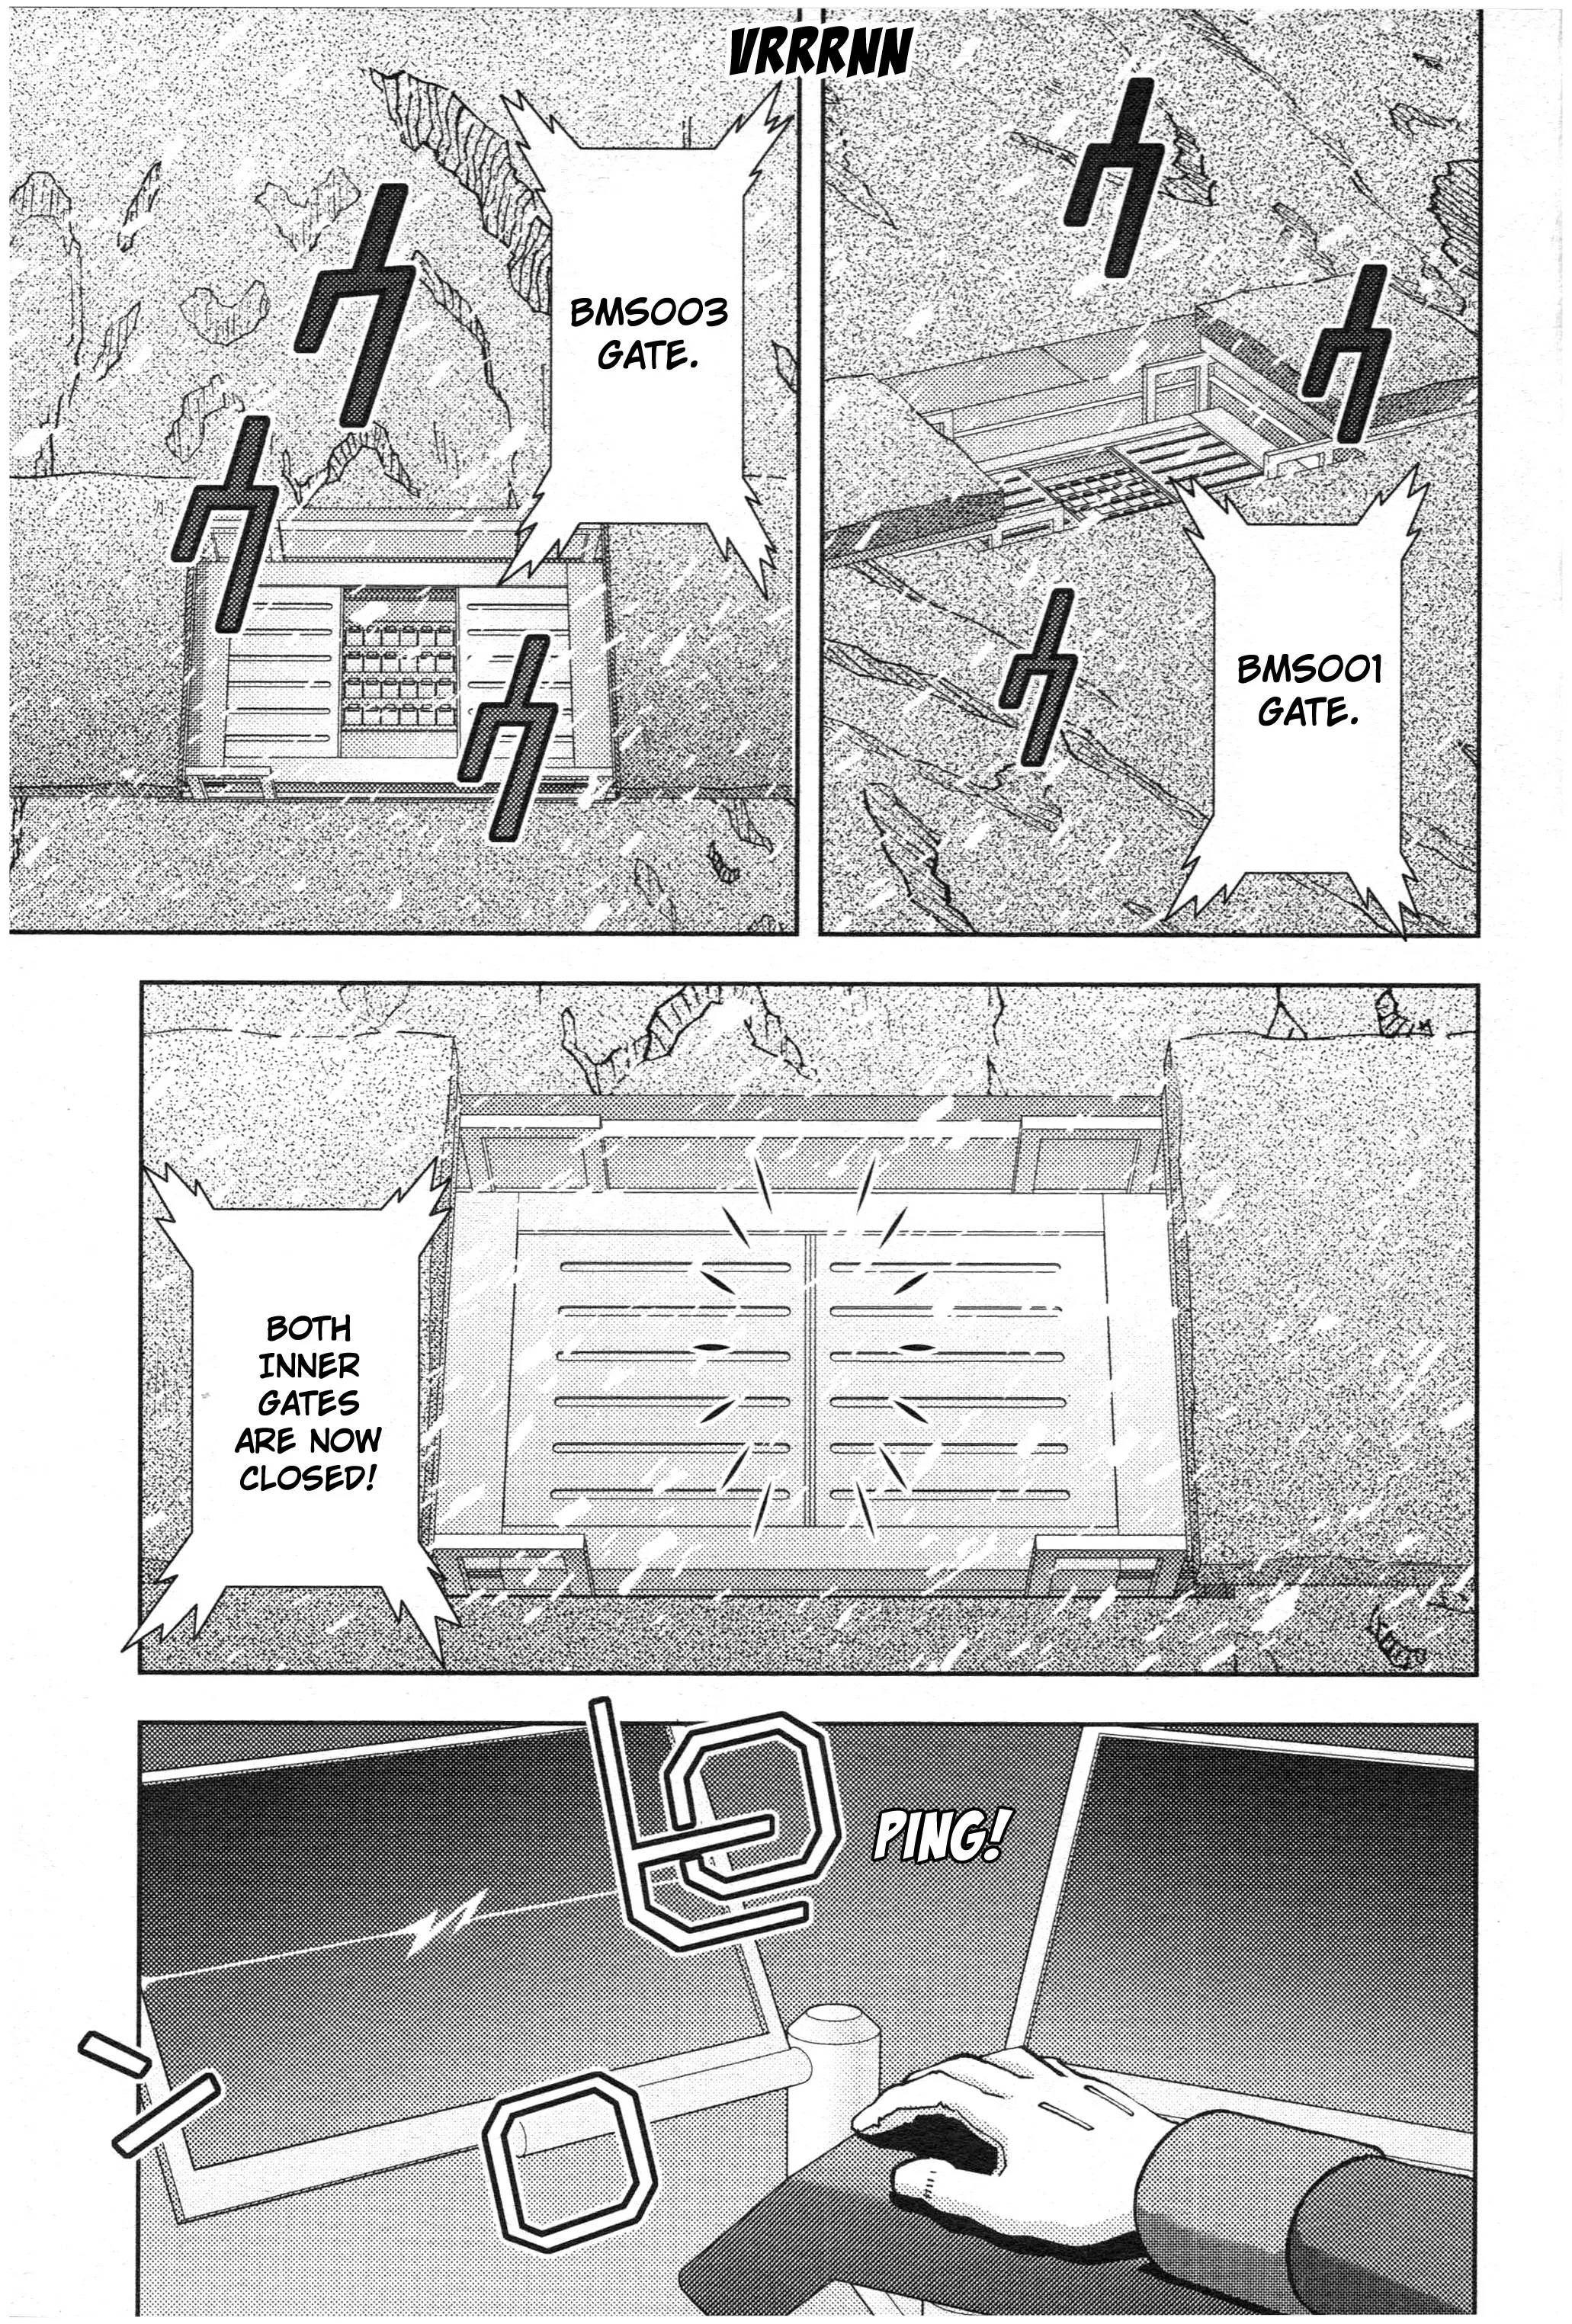 Mobile Suit Zeta Gundam - Define - 78 page 7-f3cf8ccf